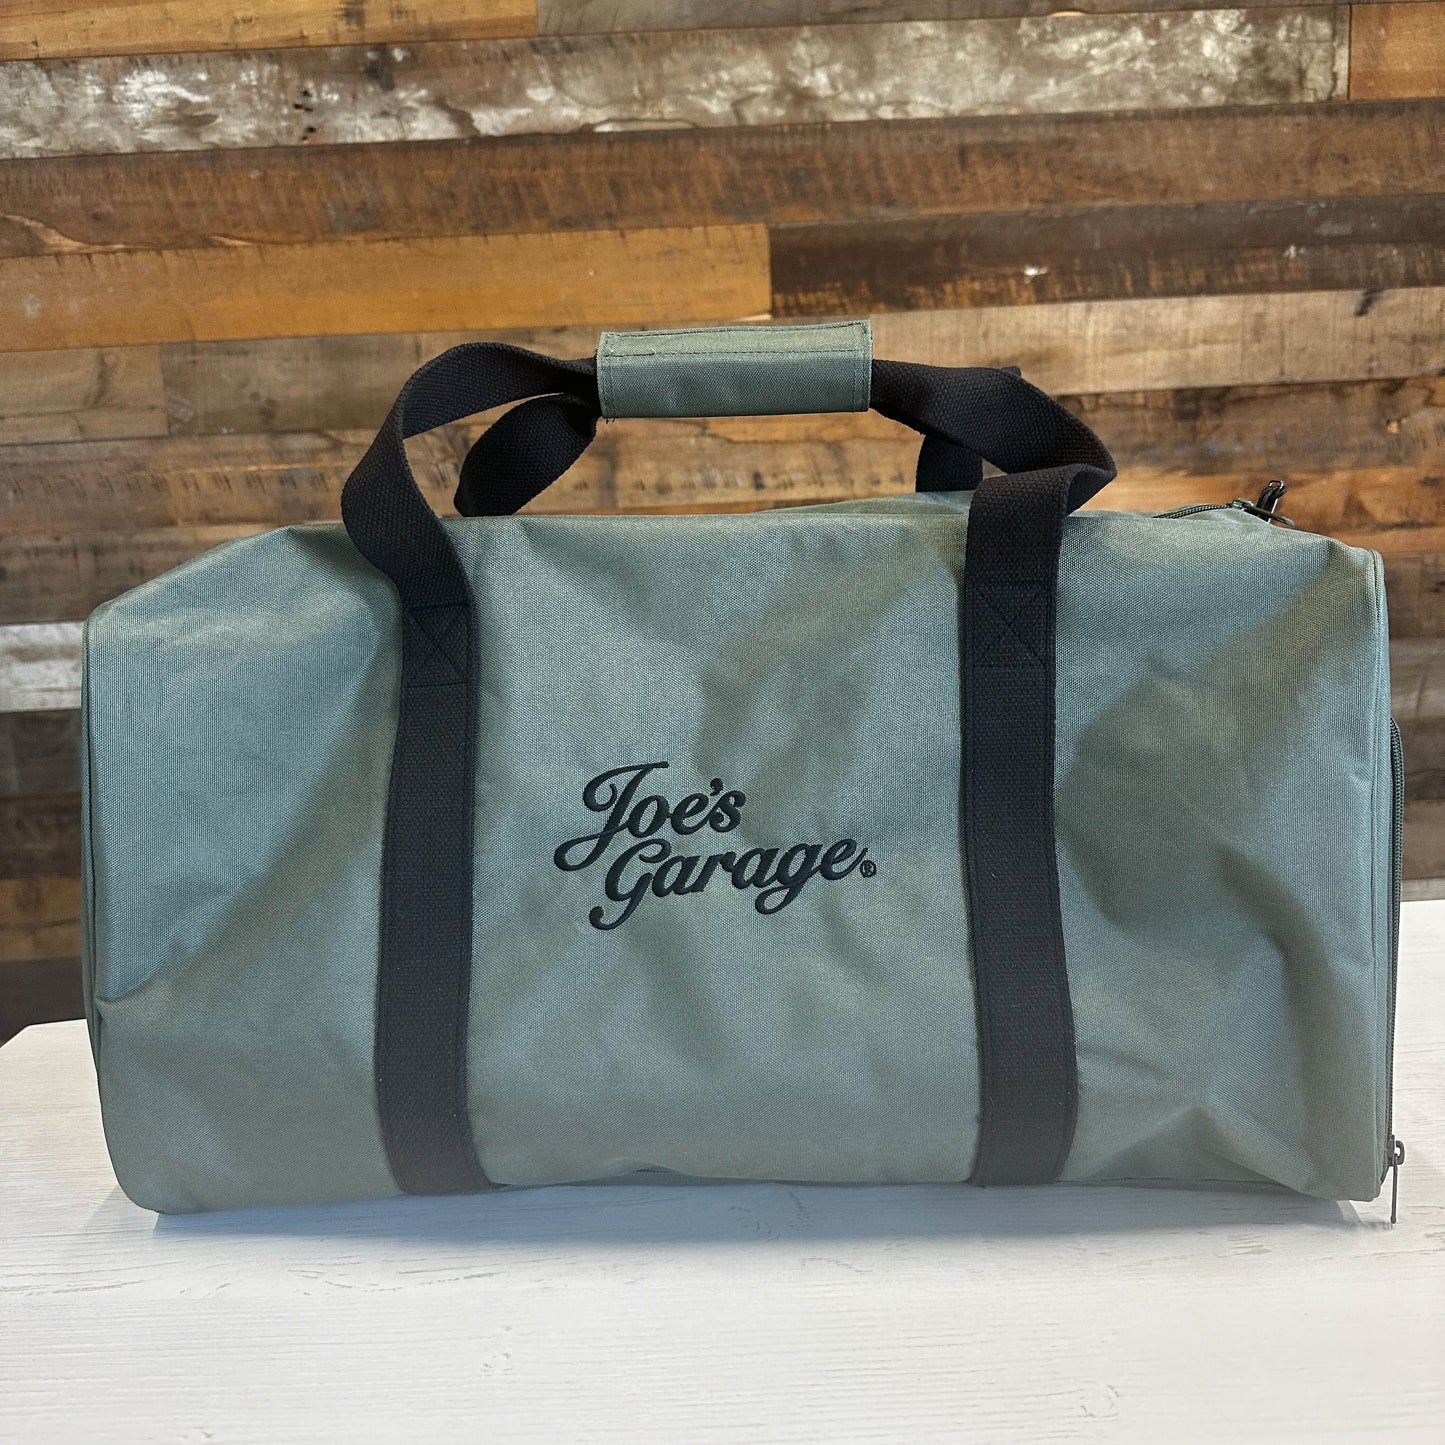 Joe's Garage Travel Bag